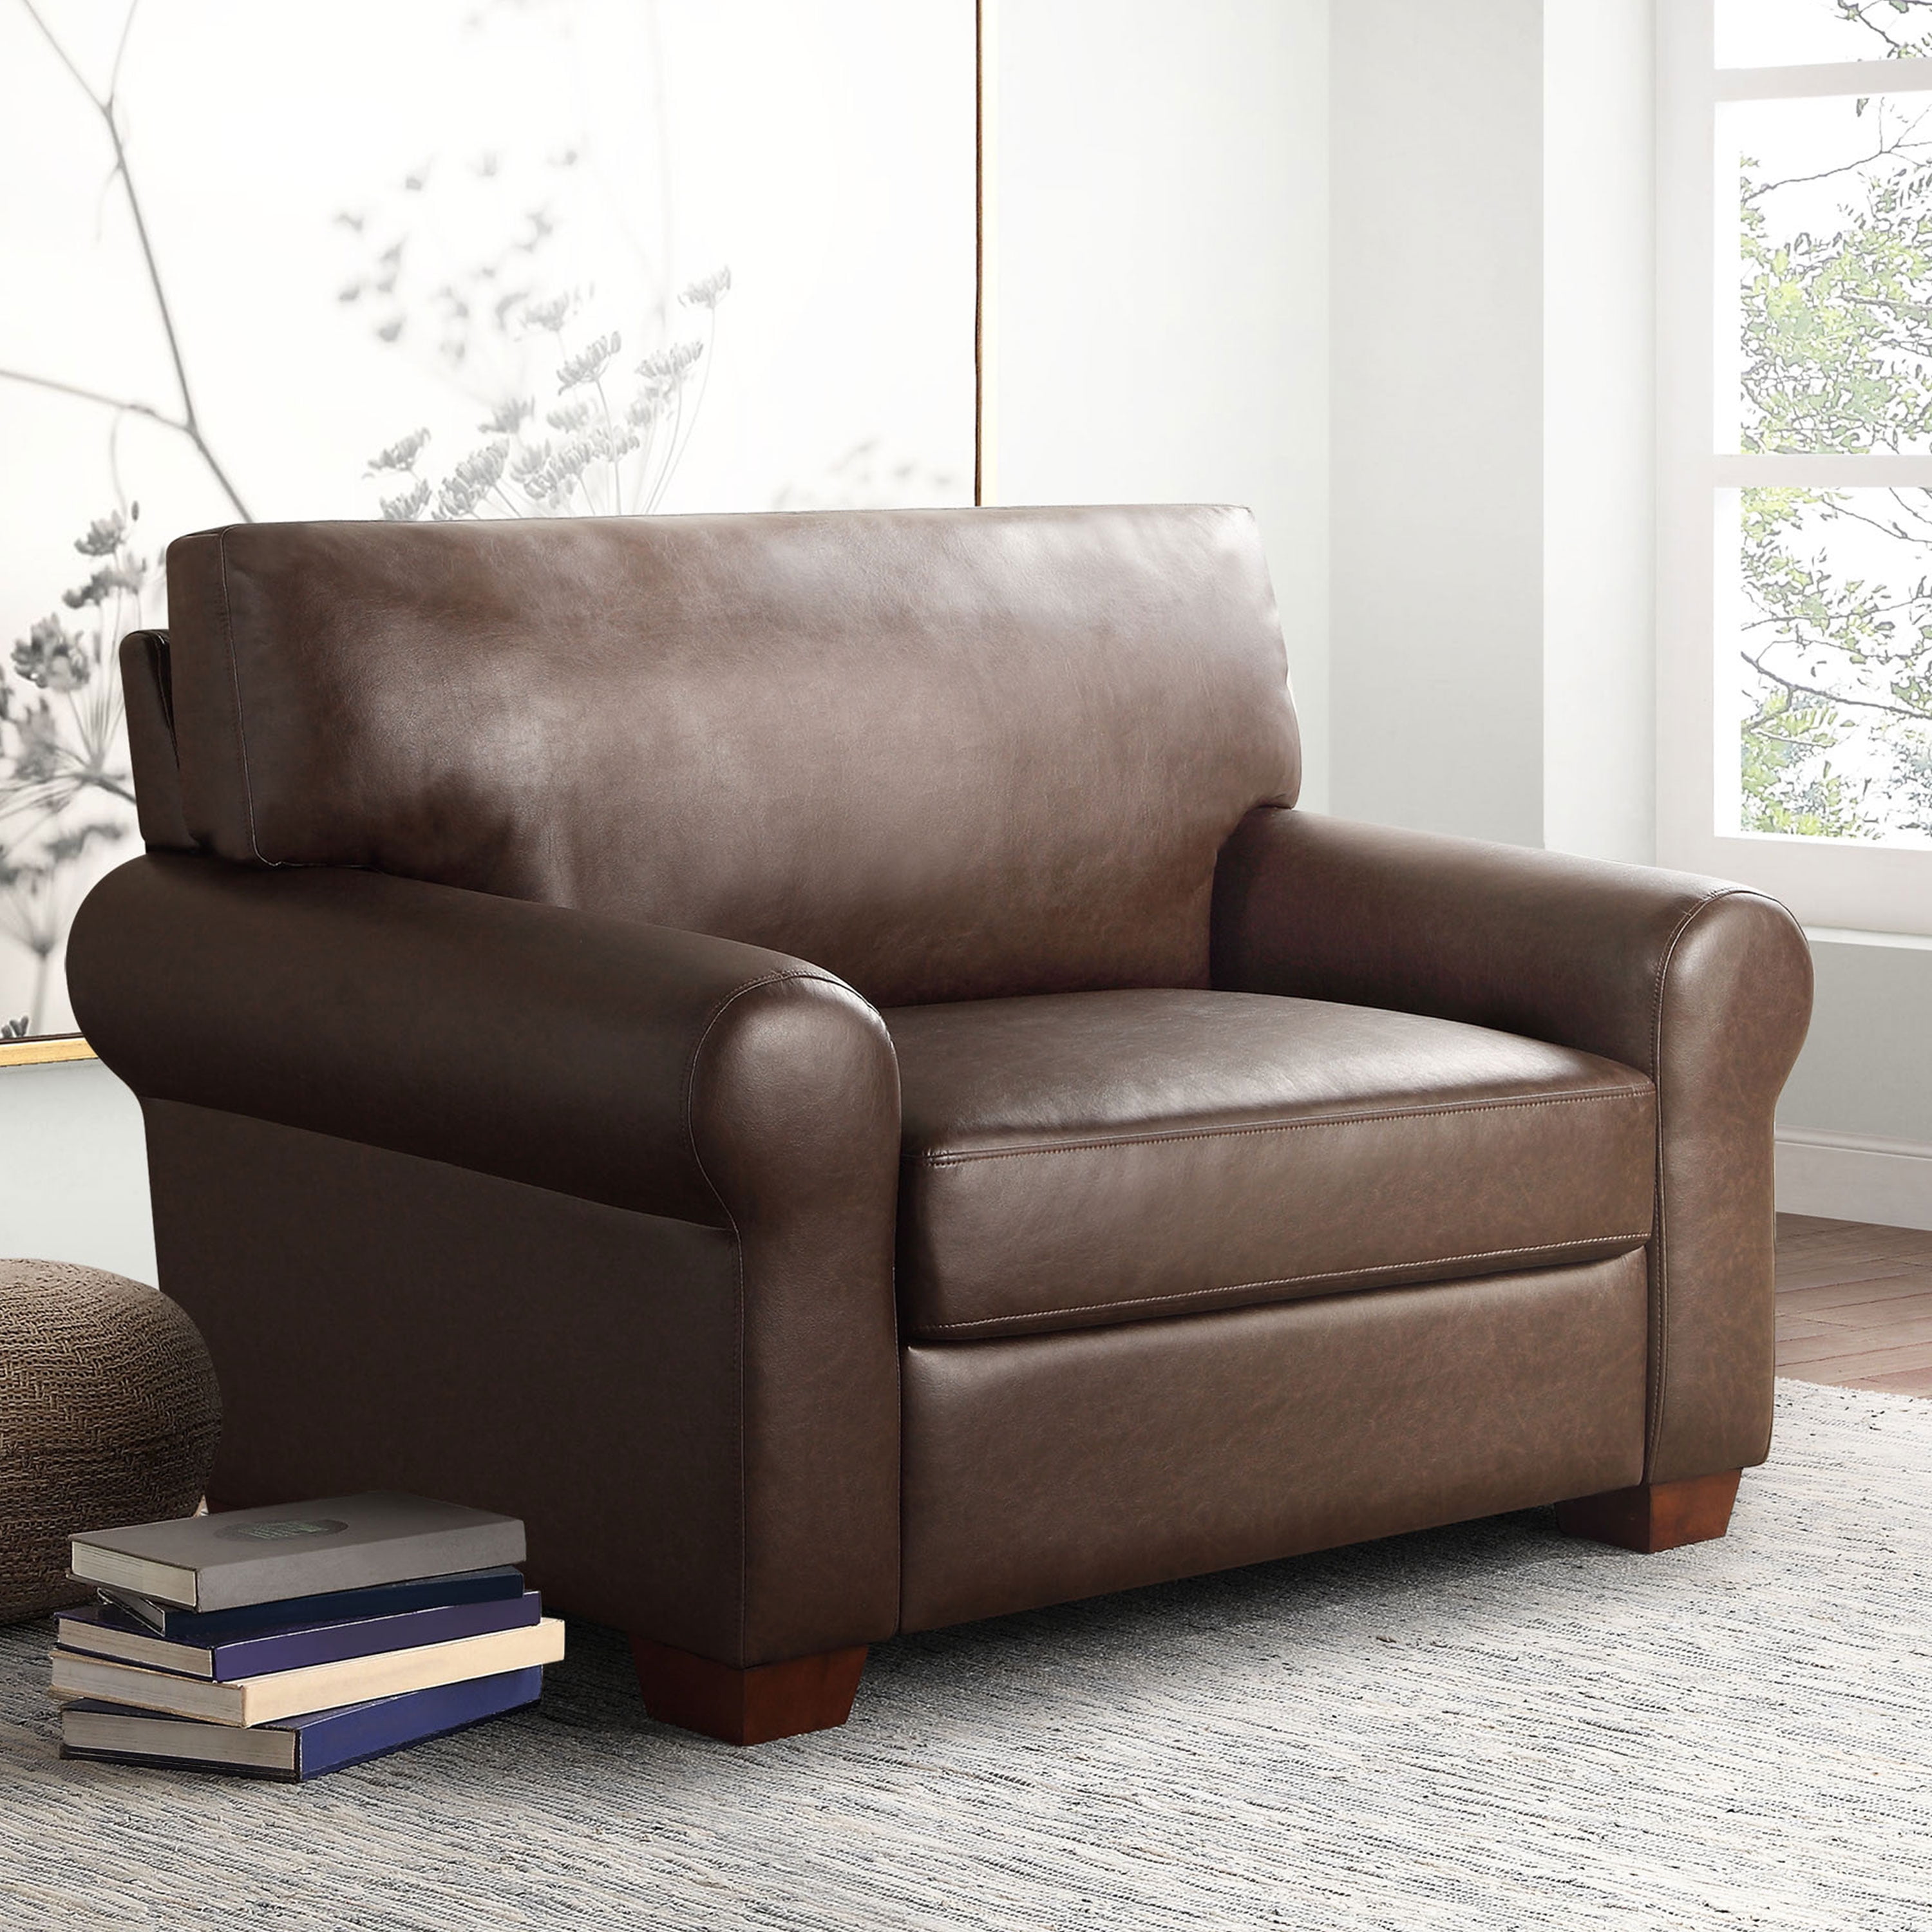 Belham Living Barret Oversized Armchair, Brown Leather Upholstery ...